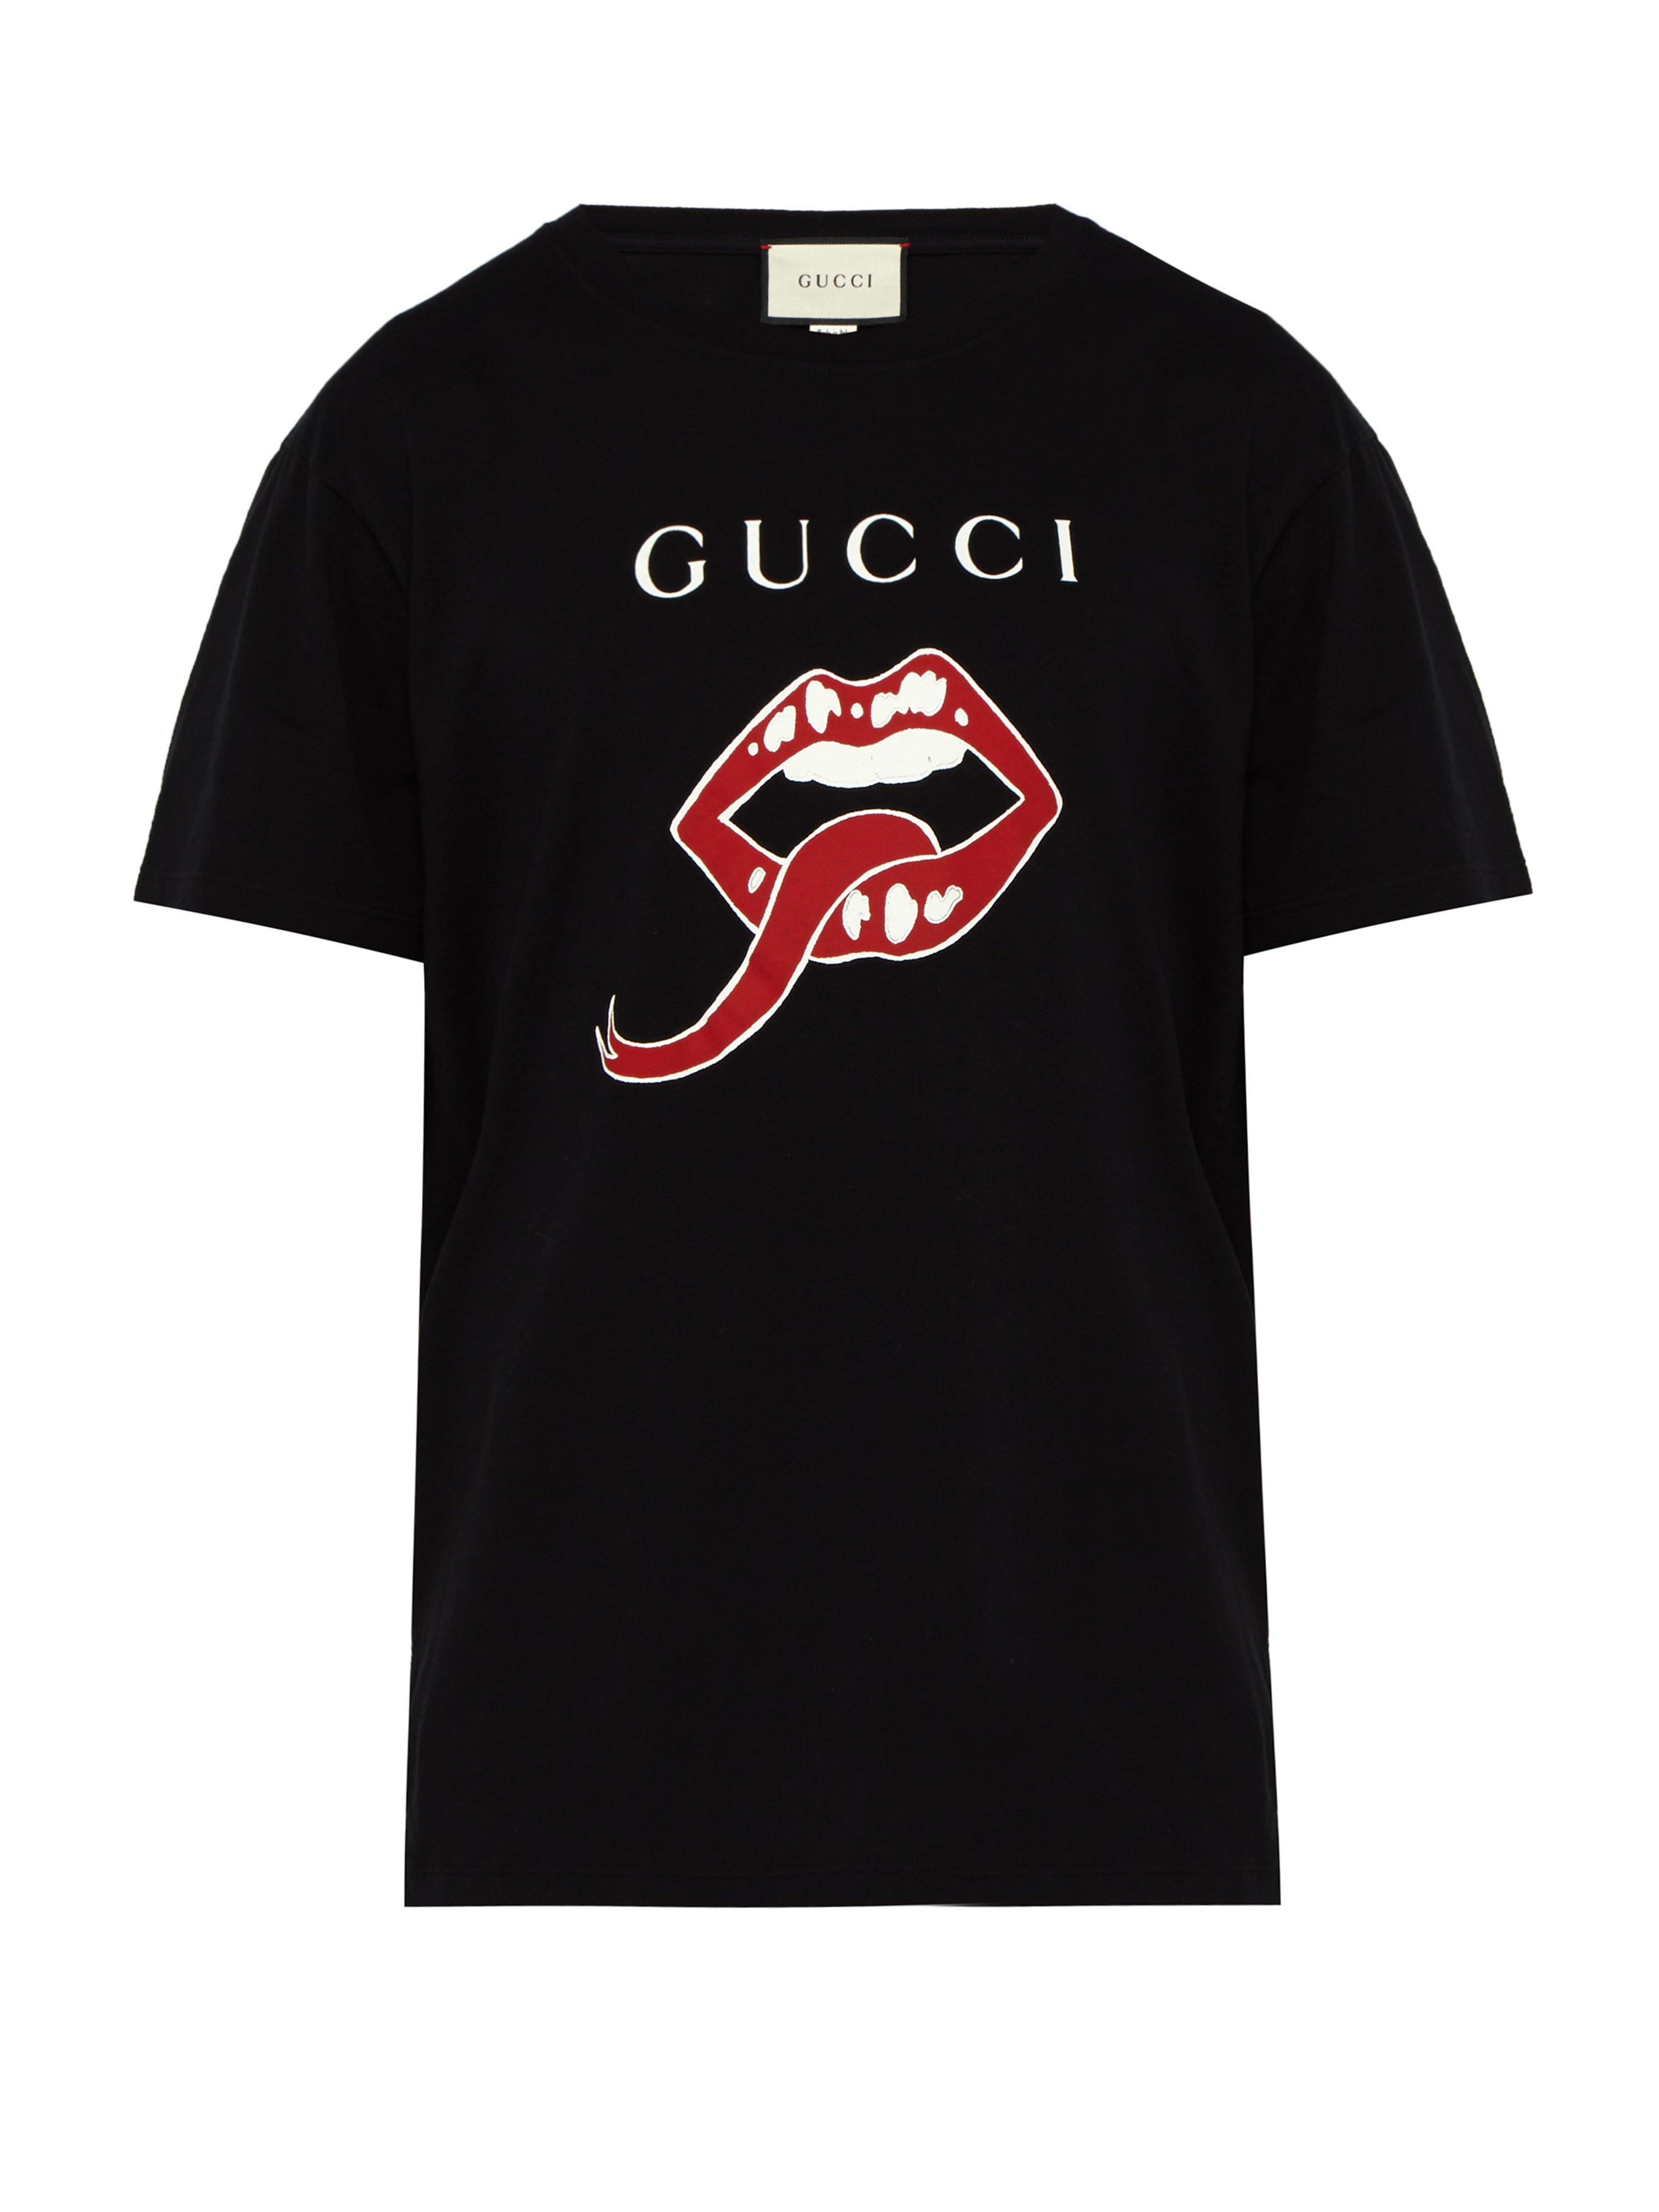 gucci plain black t shirt